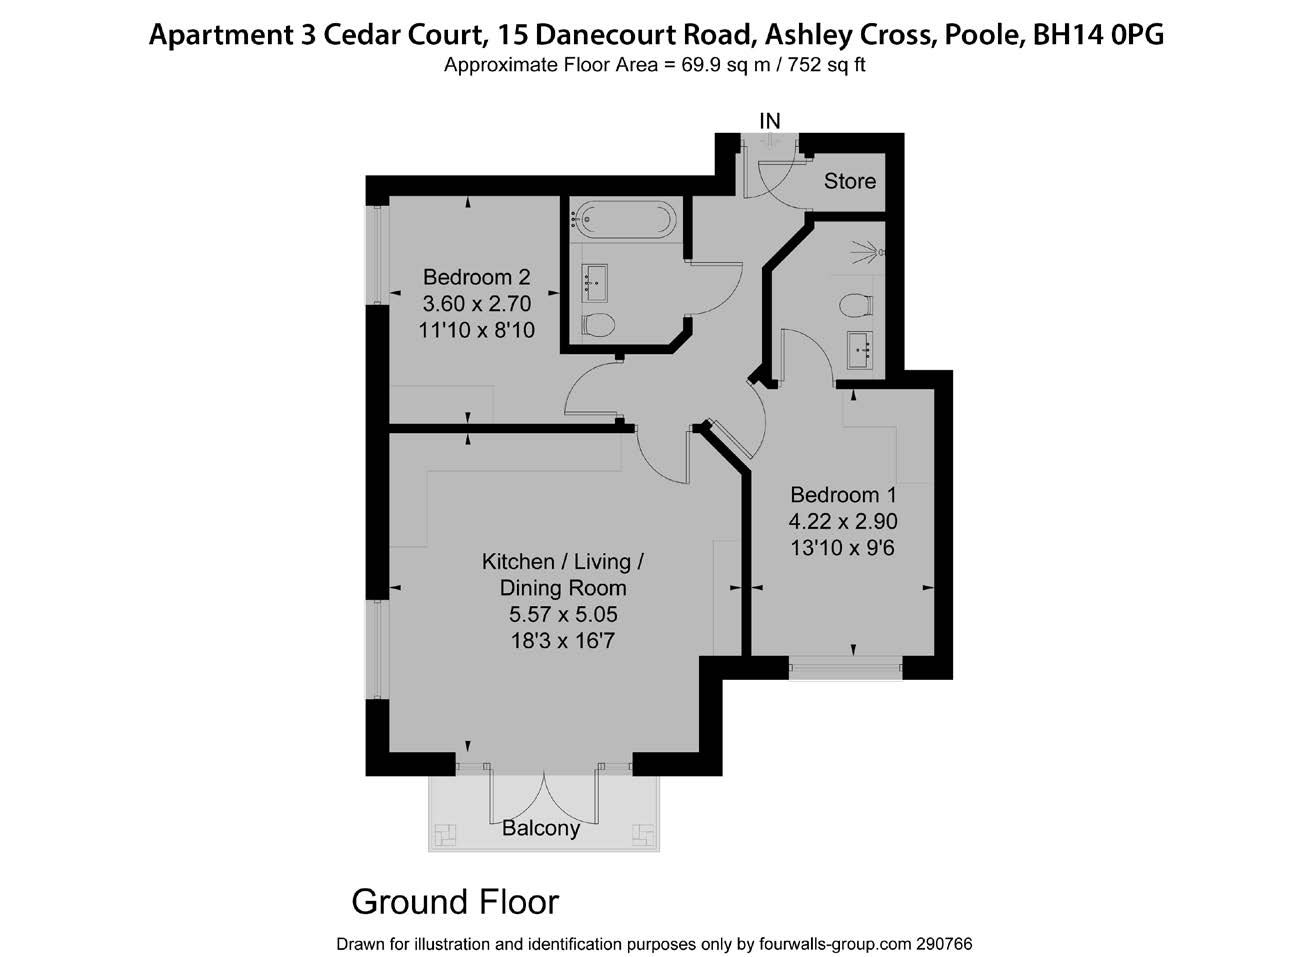 Apartment 3 Cedar Court floor plan